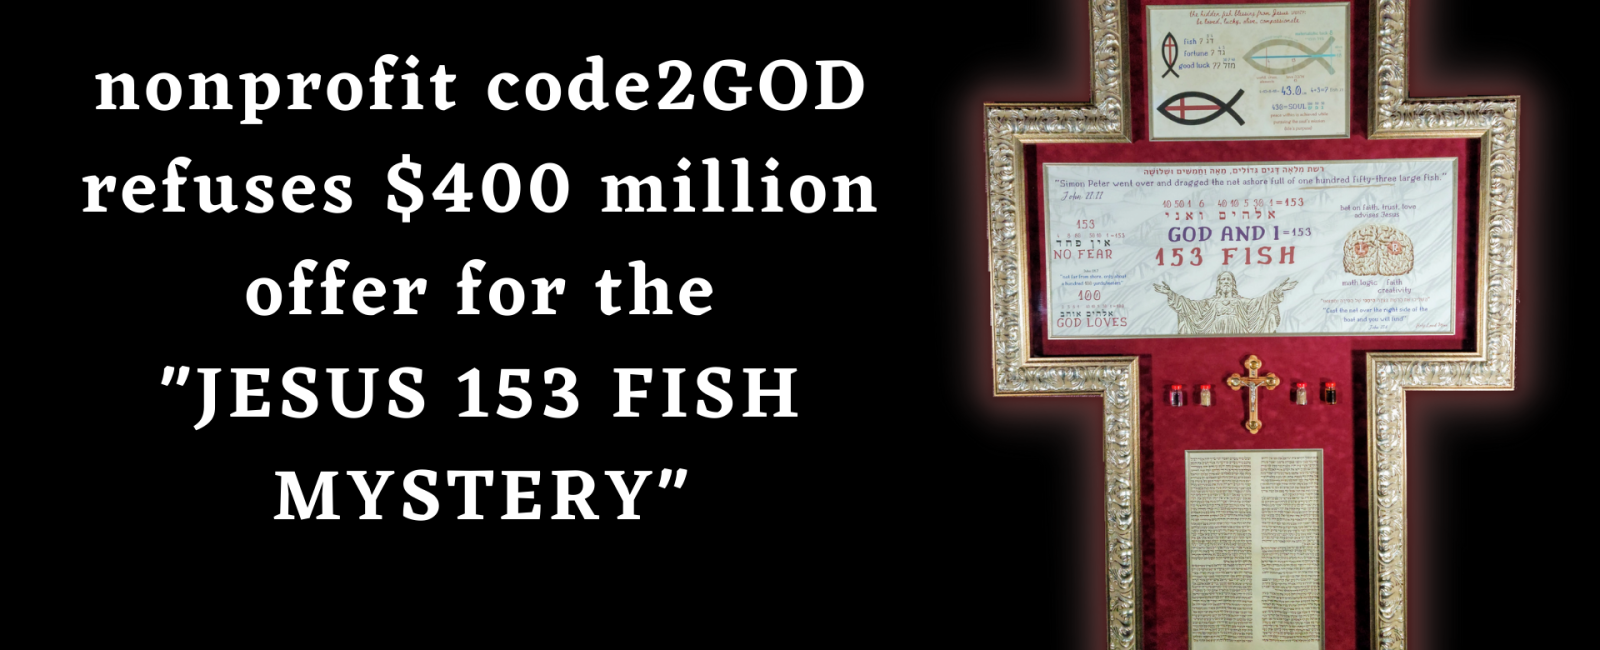 $400 MILLION OFFER FOR code2GOD JESUS ART IS DECLINED